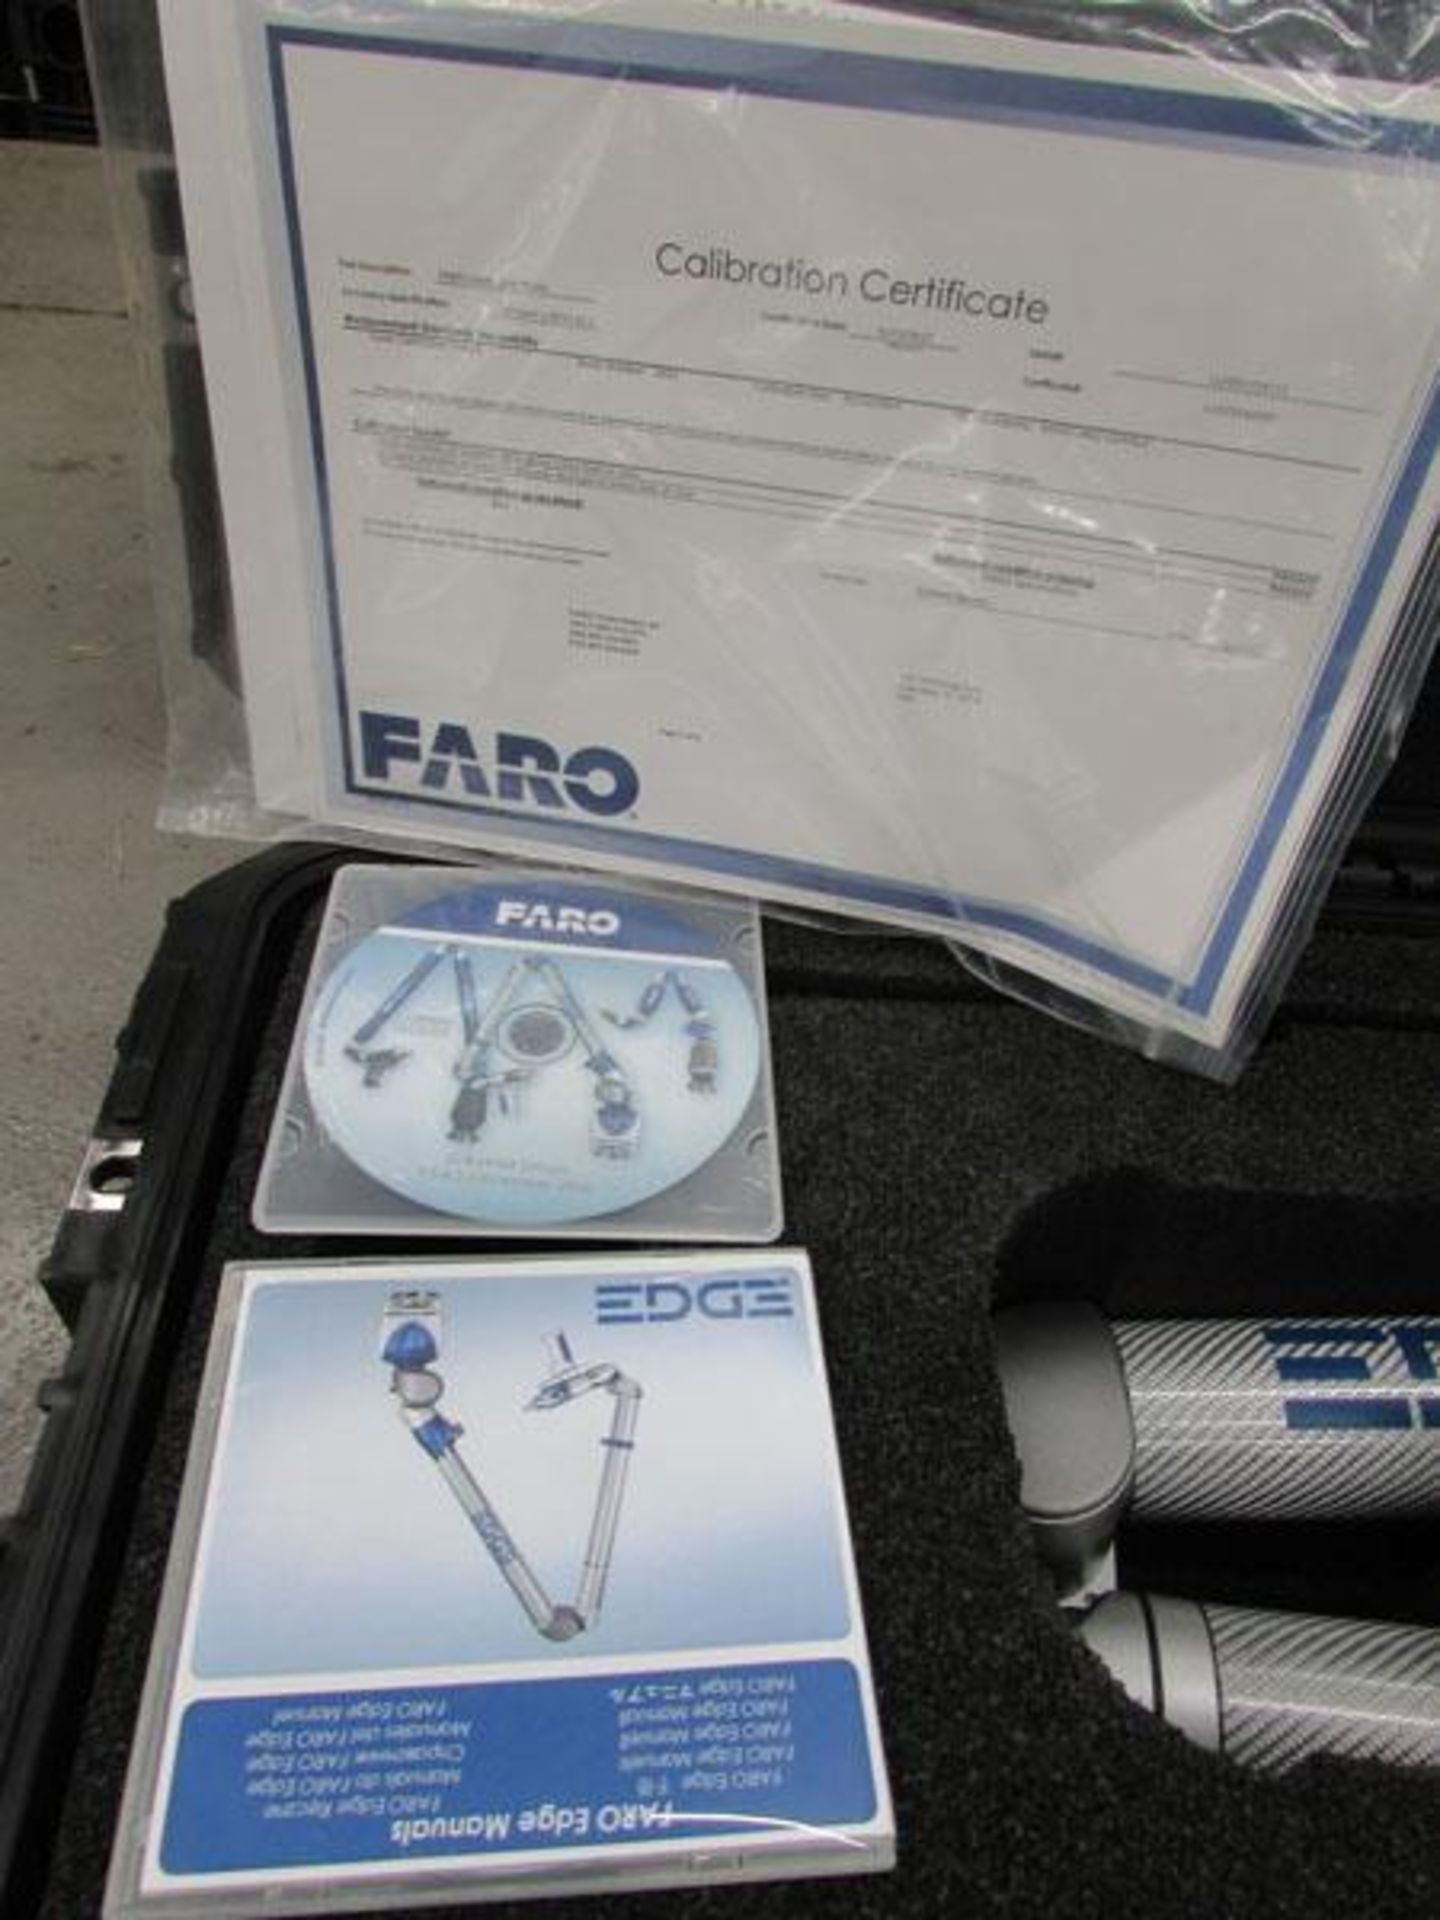 2017 Faro Edge Portable Laser CMM - Image 10 of 11